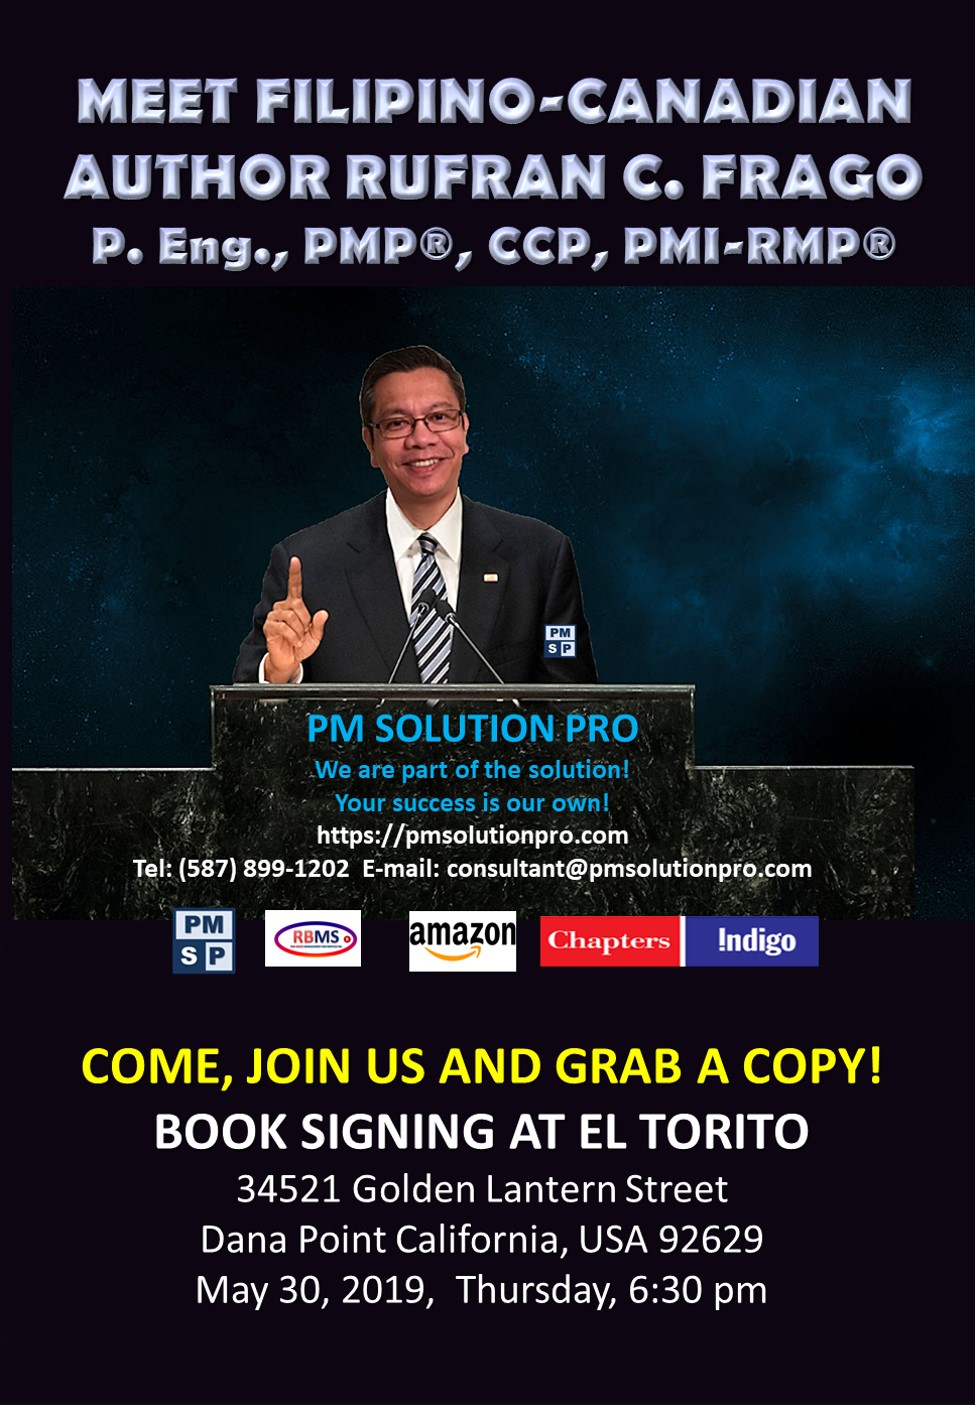 El-Torito Book Signing